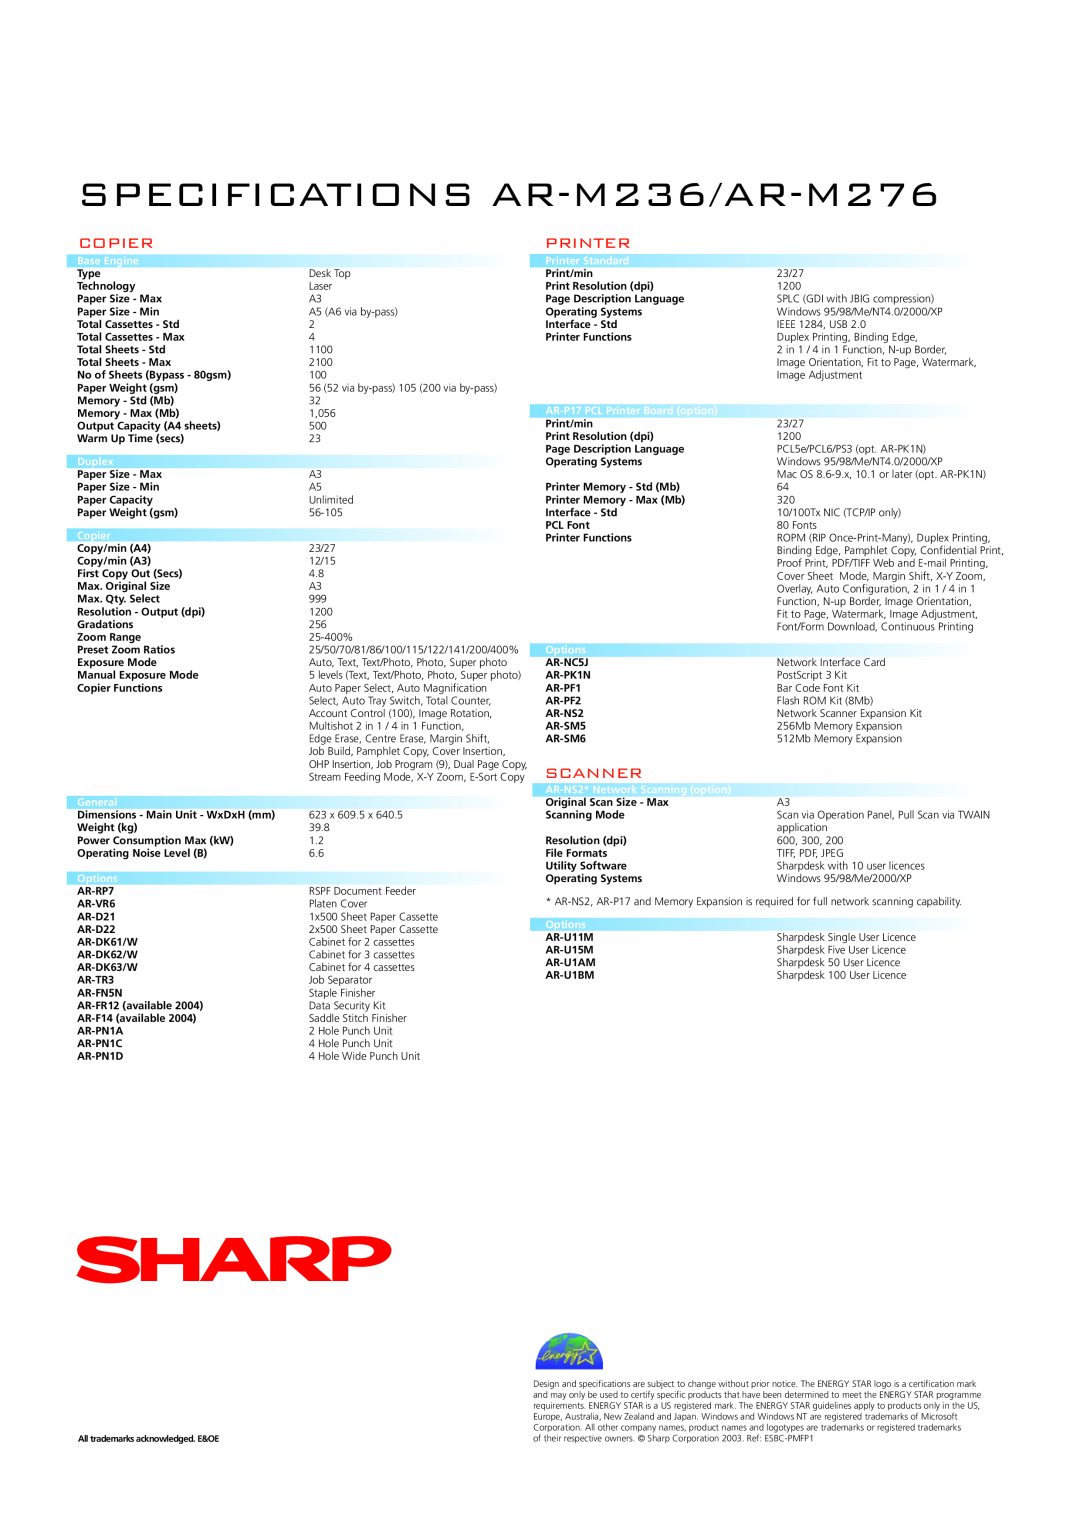 Sharp manual SPECIFICATIONS AR-M236/AR-M276, Copier, Printer, Scanner 